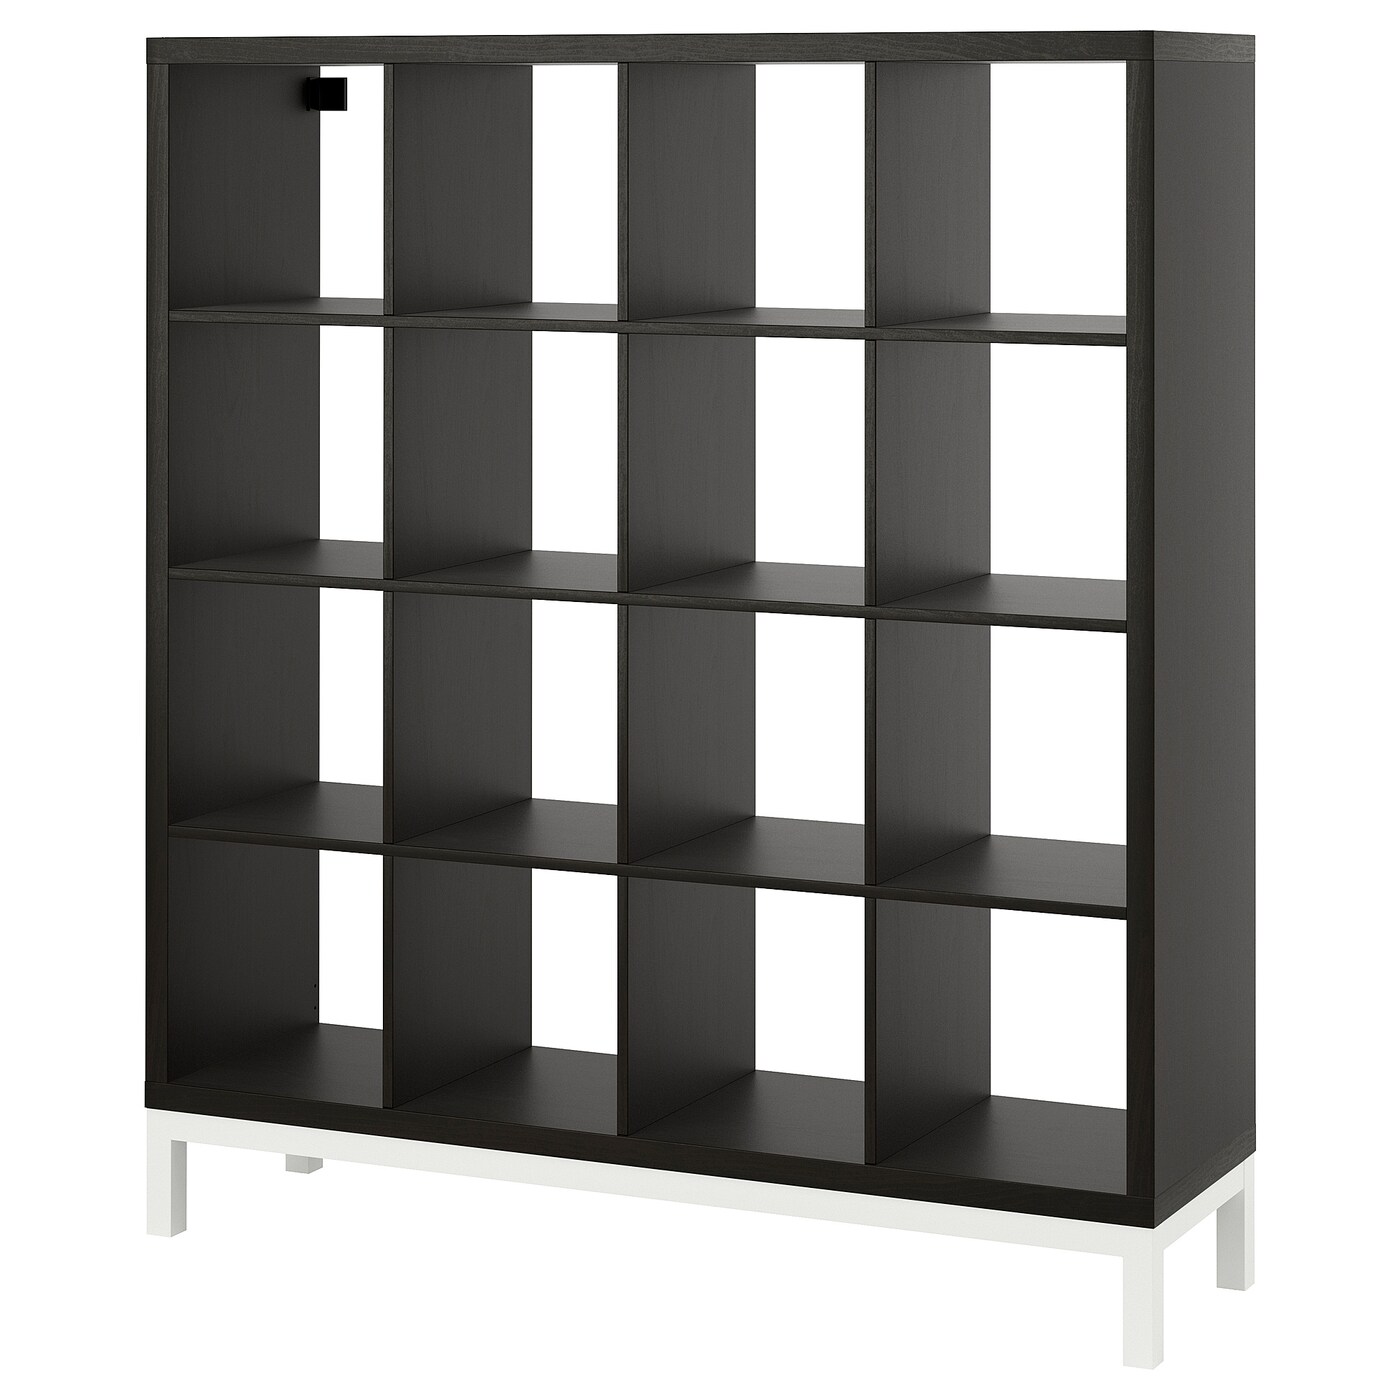 Стеллаж - IKEA KALLAX, 147х39х164 см, черно-коричневый/белый, КАЛЛАКС ИКЕА